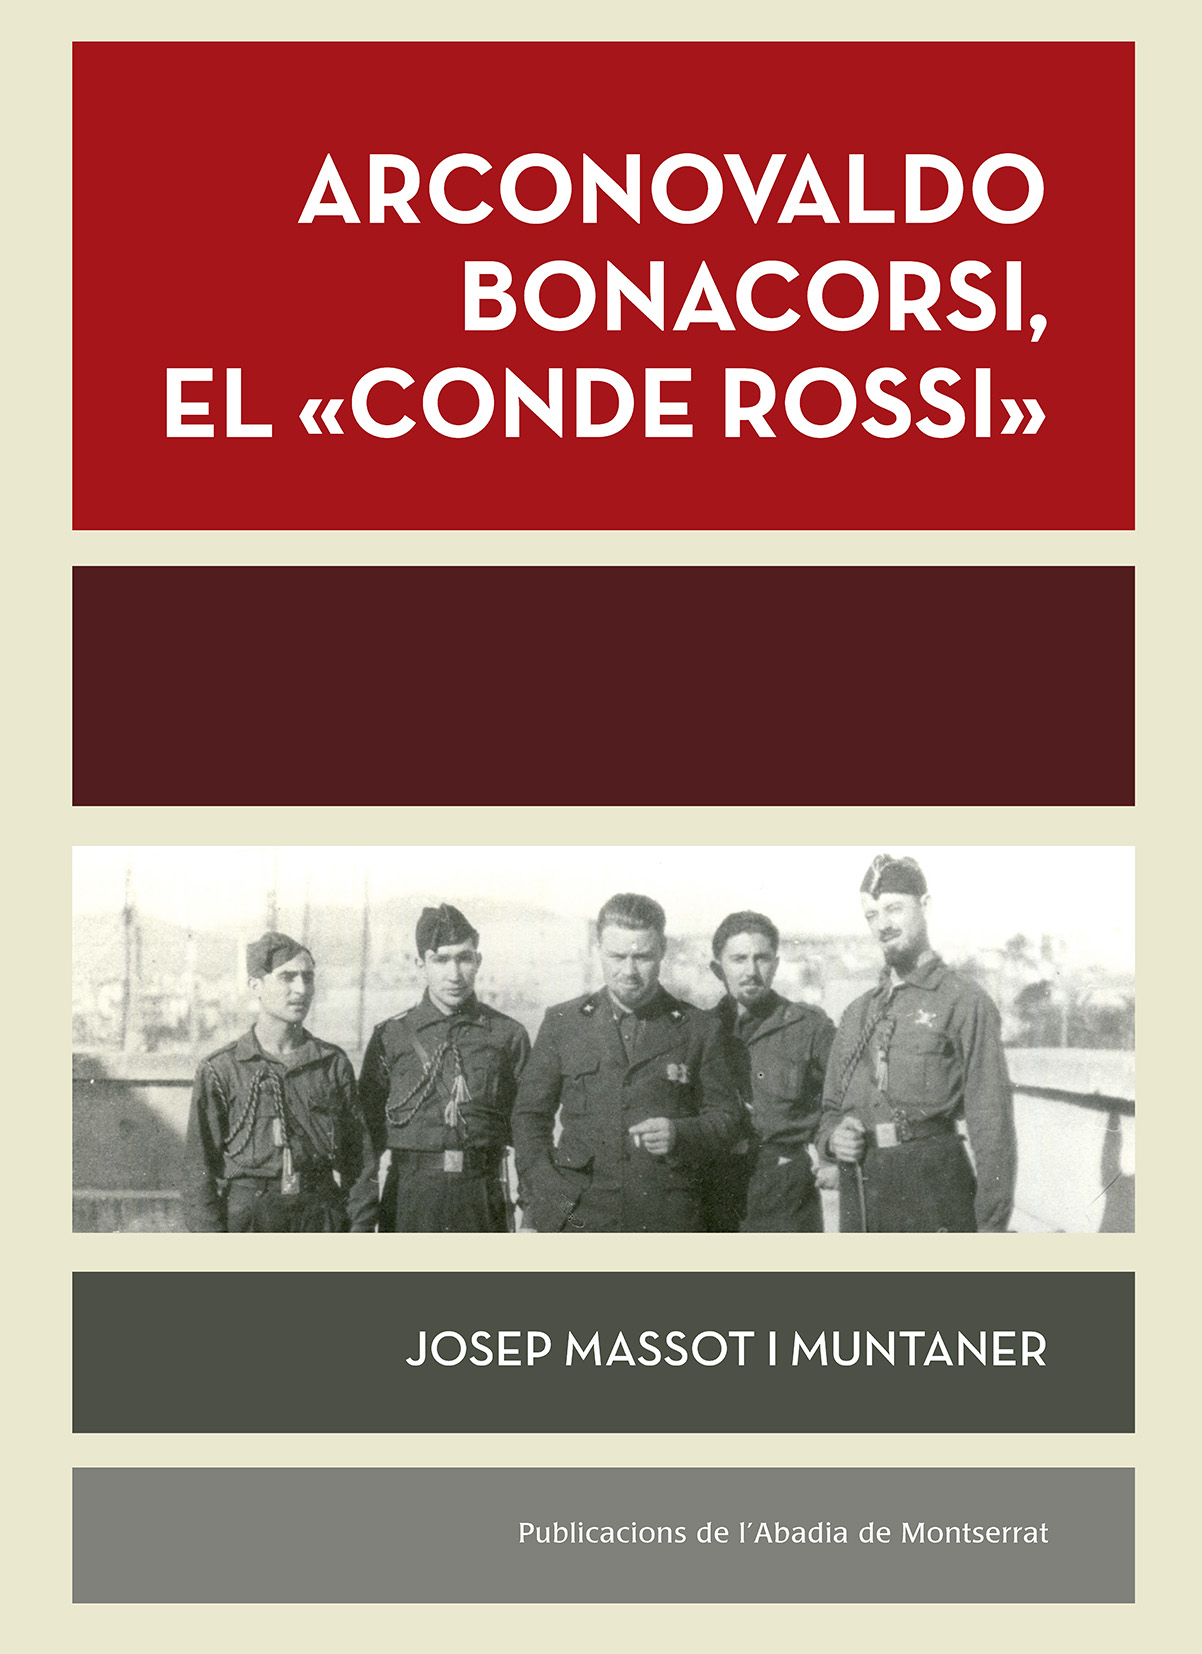 Josep Massot i Muntaner